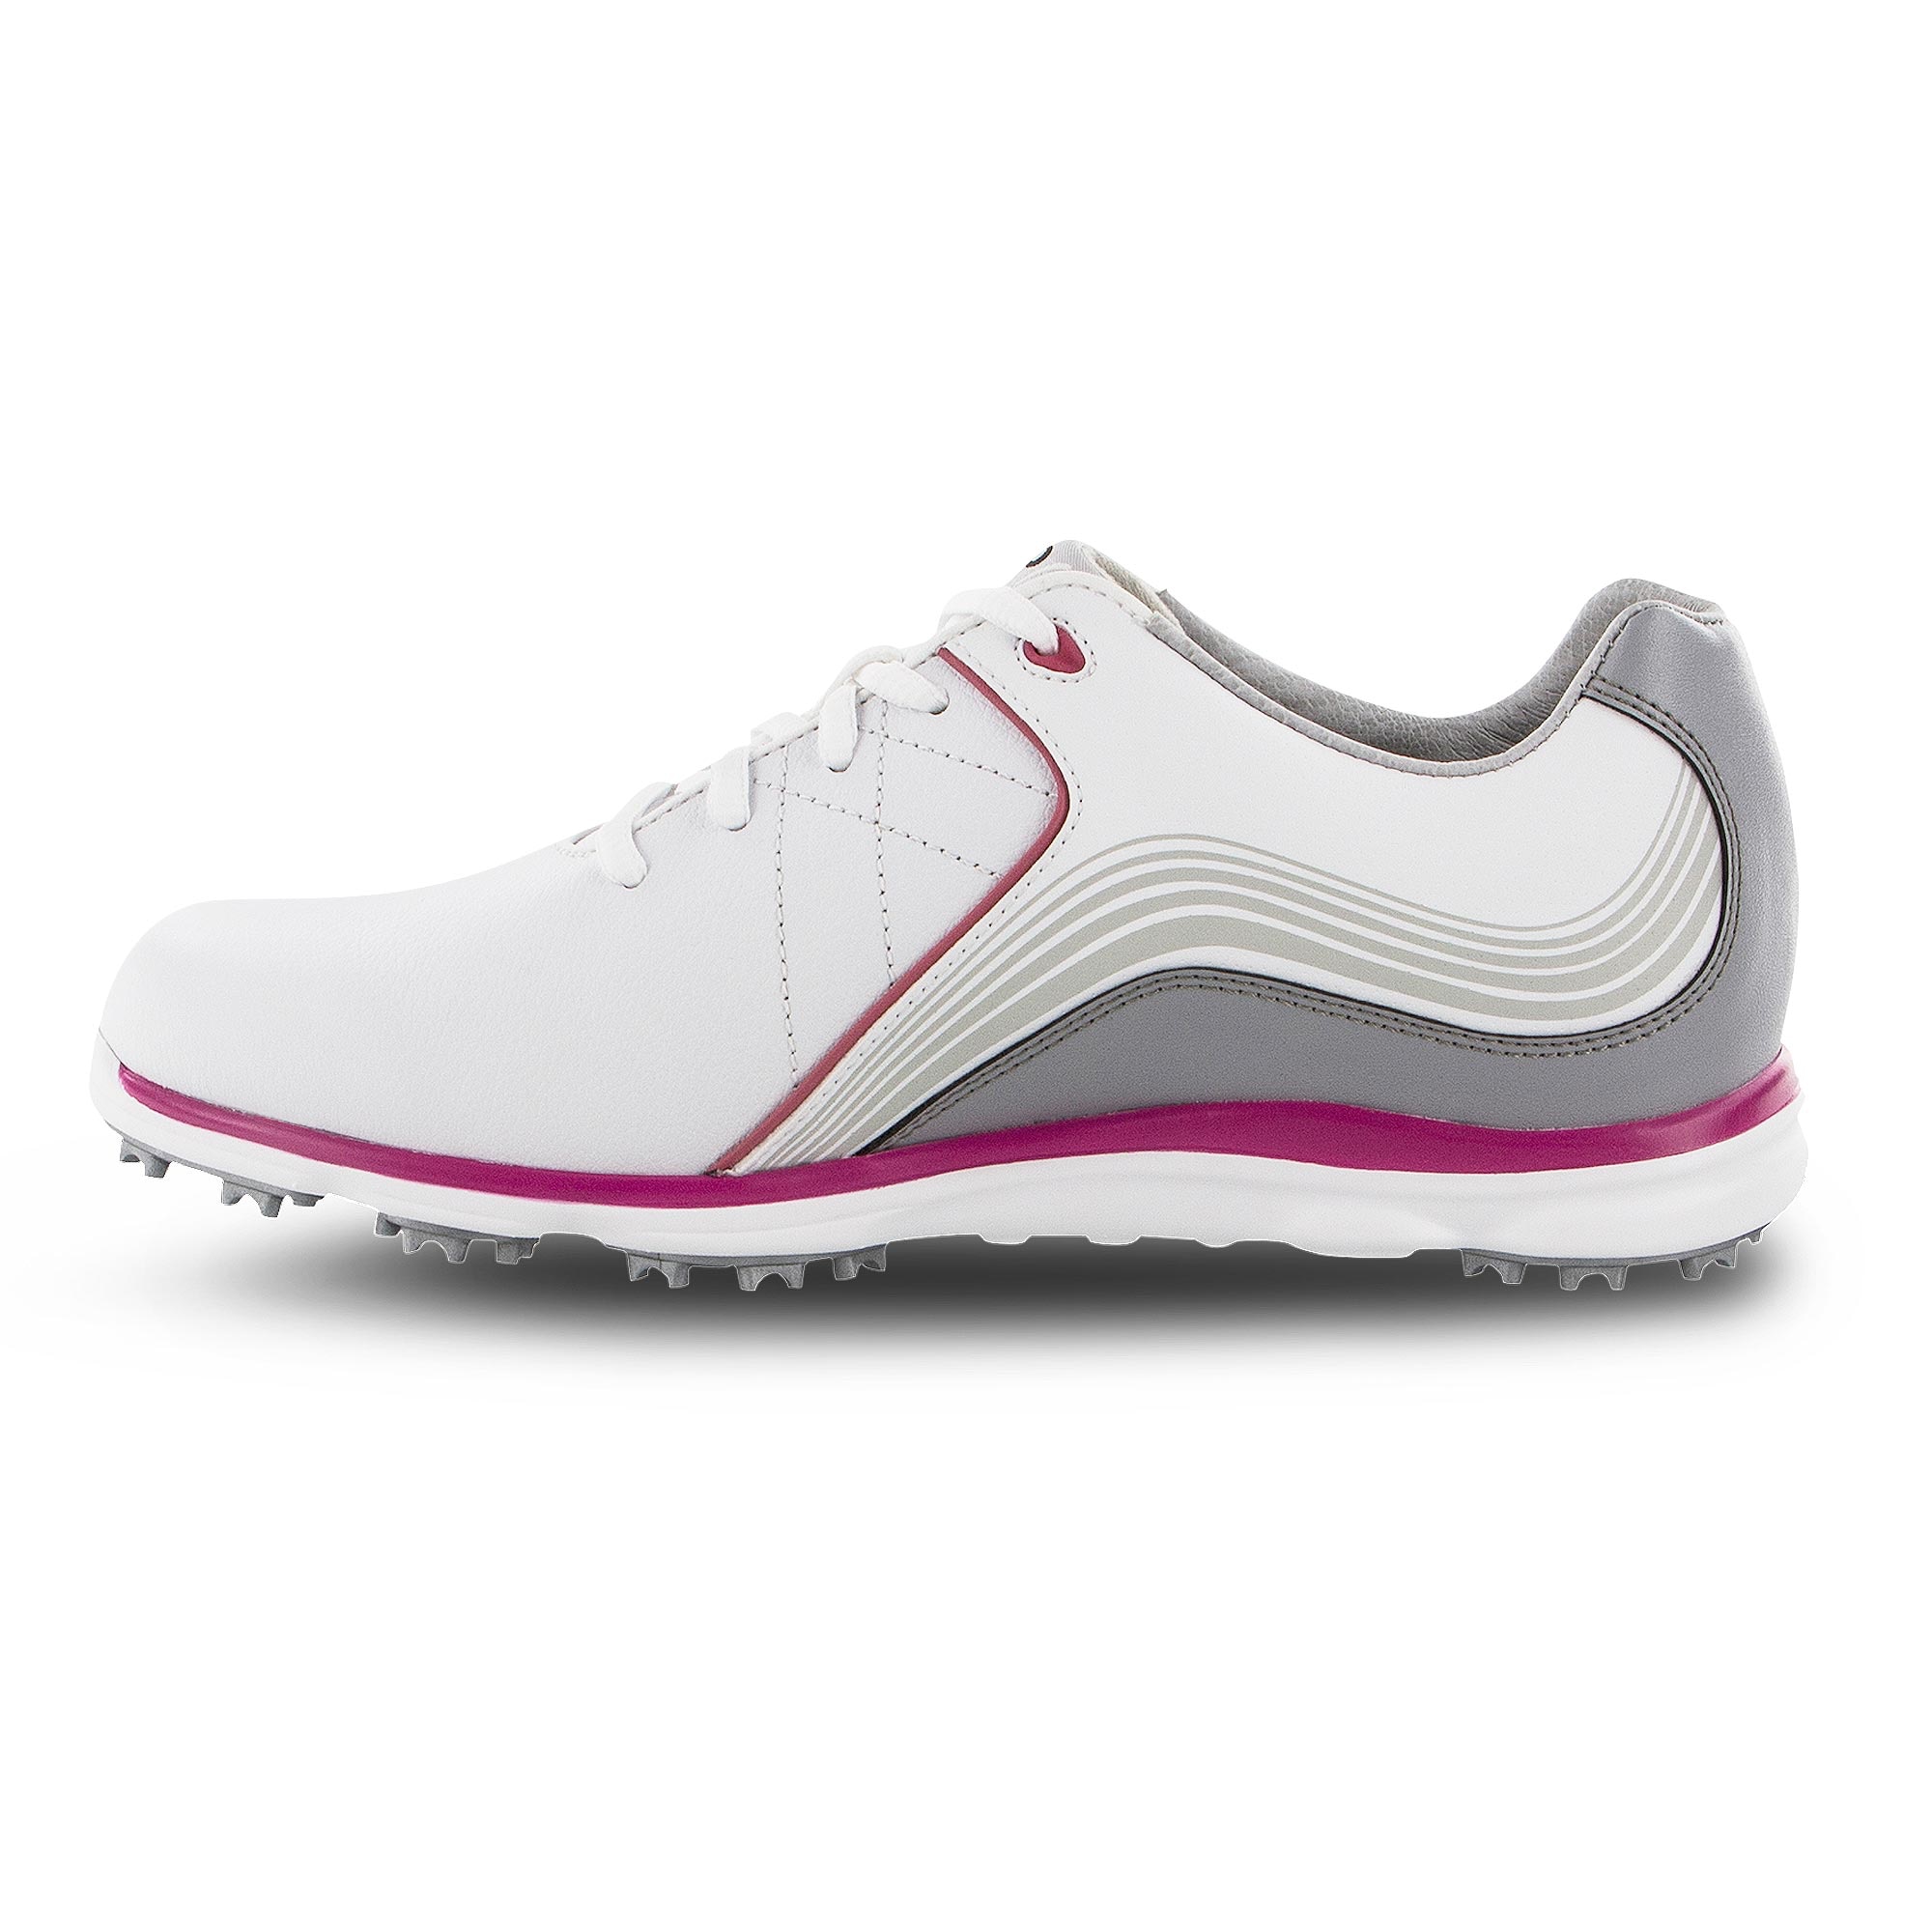 footjoy women's pro sl golf shoes